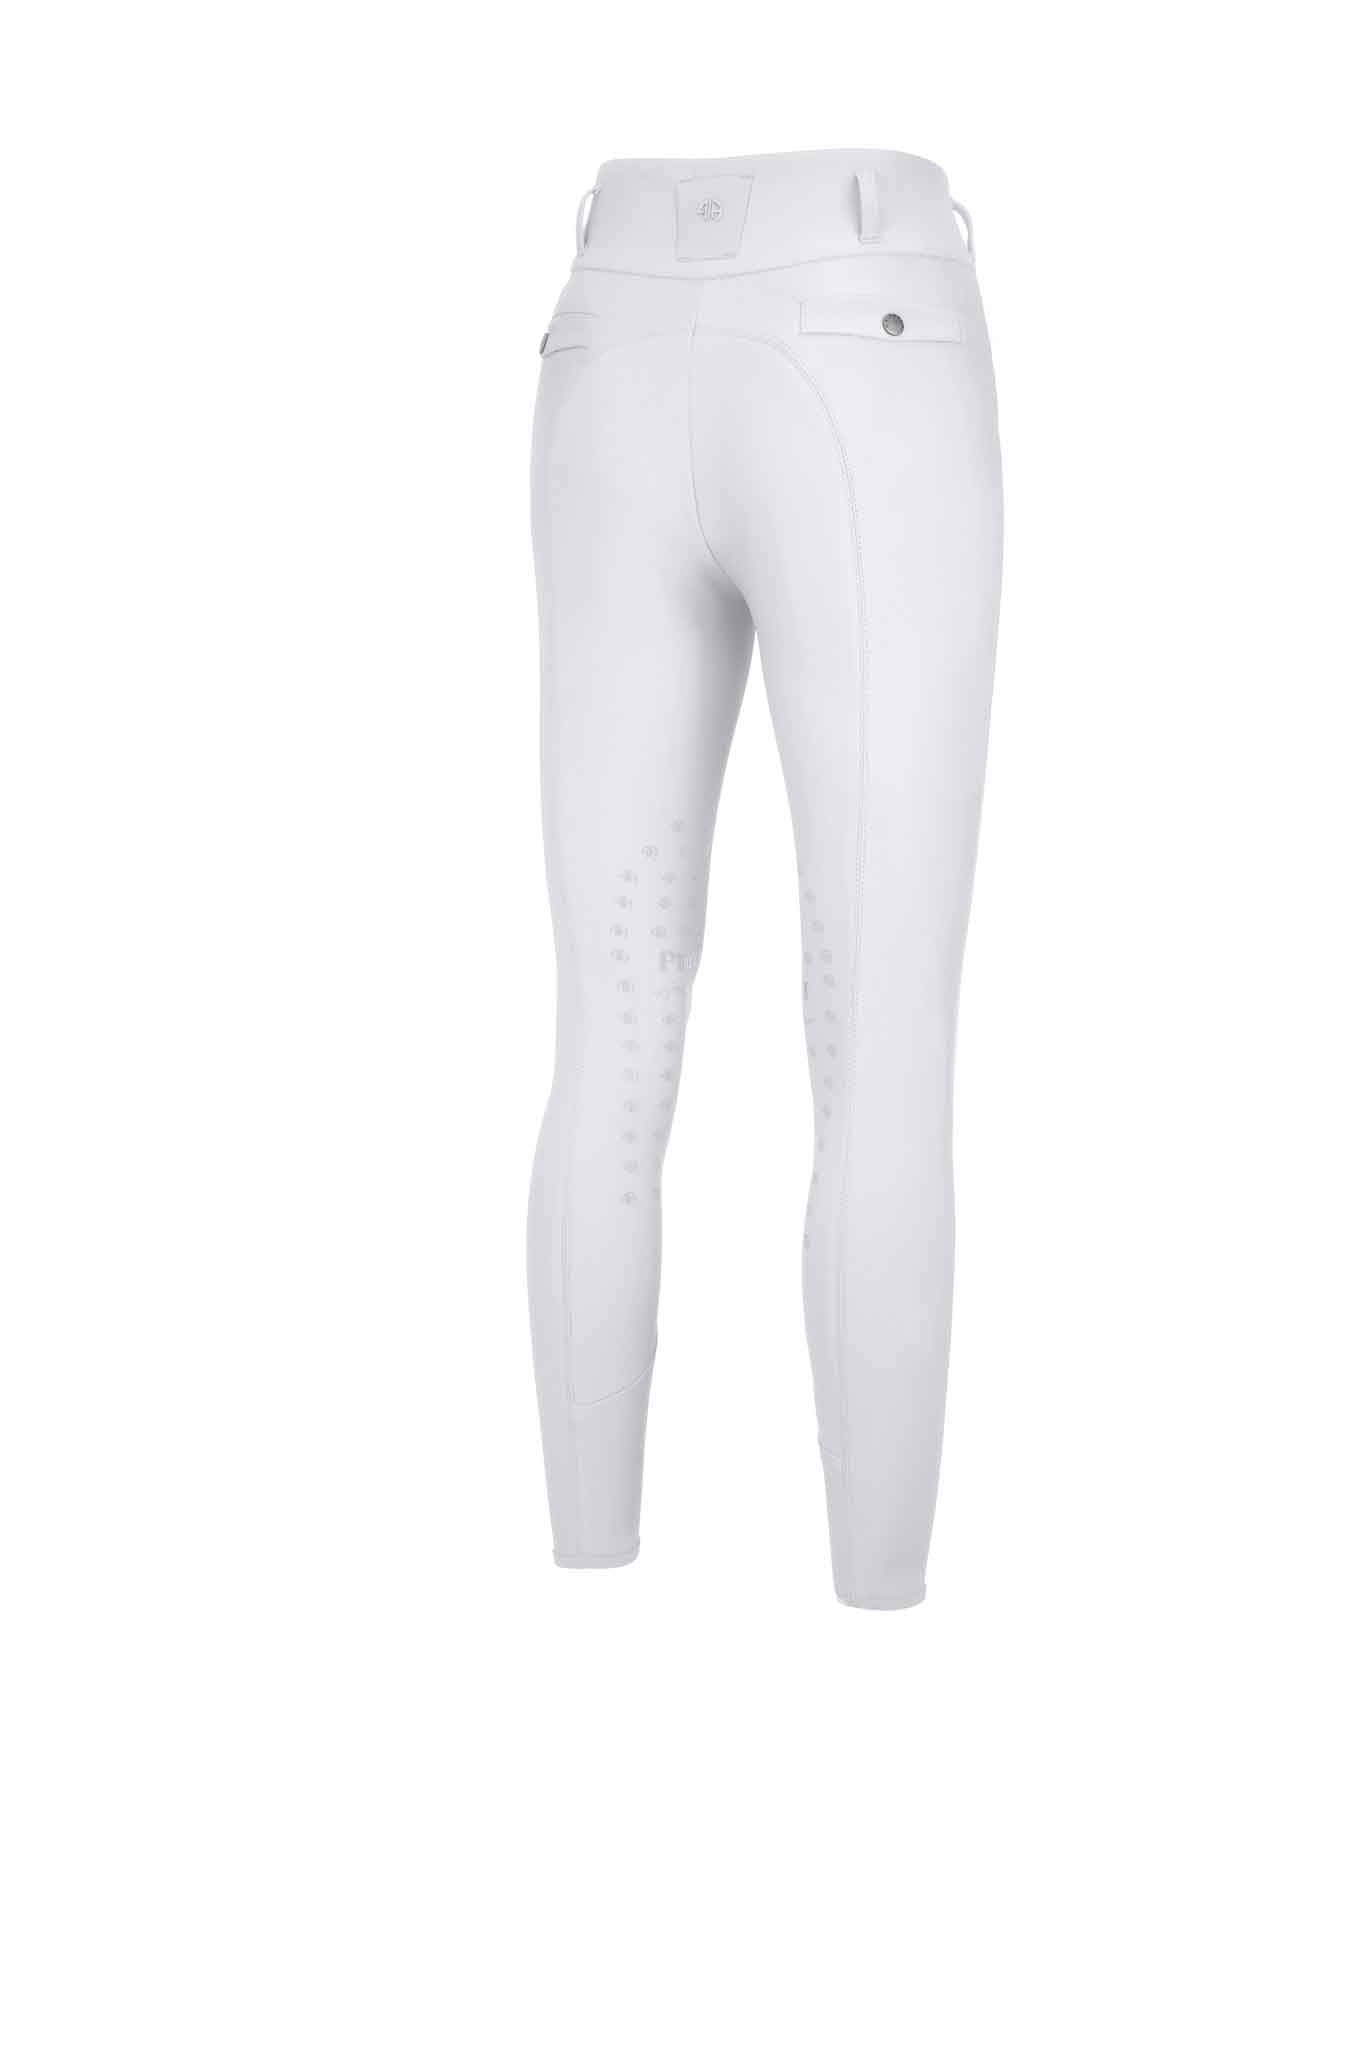 Pantalon genoux grip Highwaist, Blanc - Pikeur AH 2023